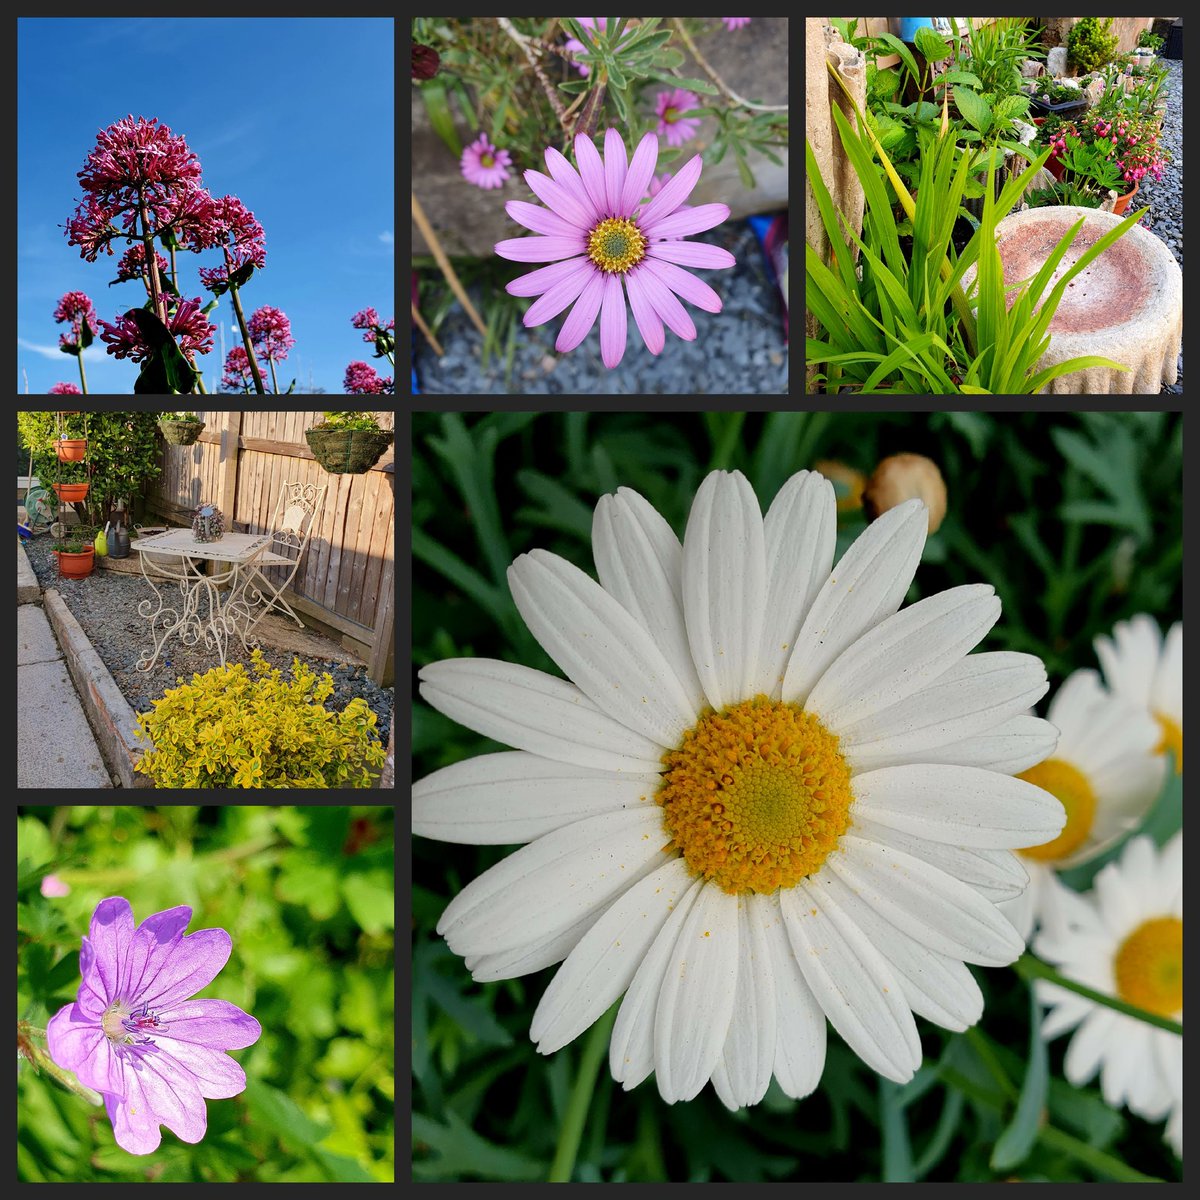 #SixOnSaturday
Morning 🙂 
#gardening #GoodMorningEveryone #Flowers #SaturdayVibes